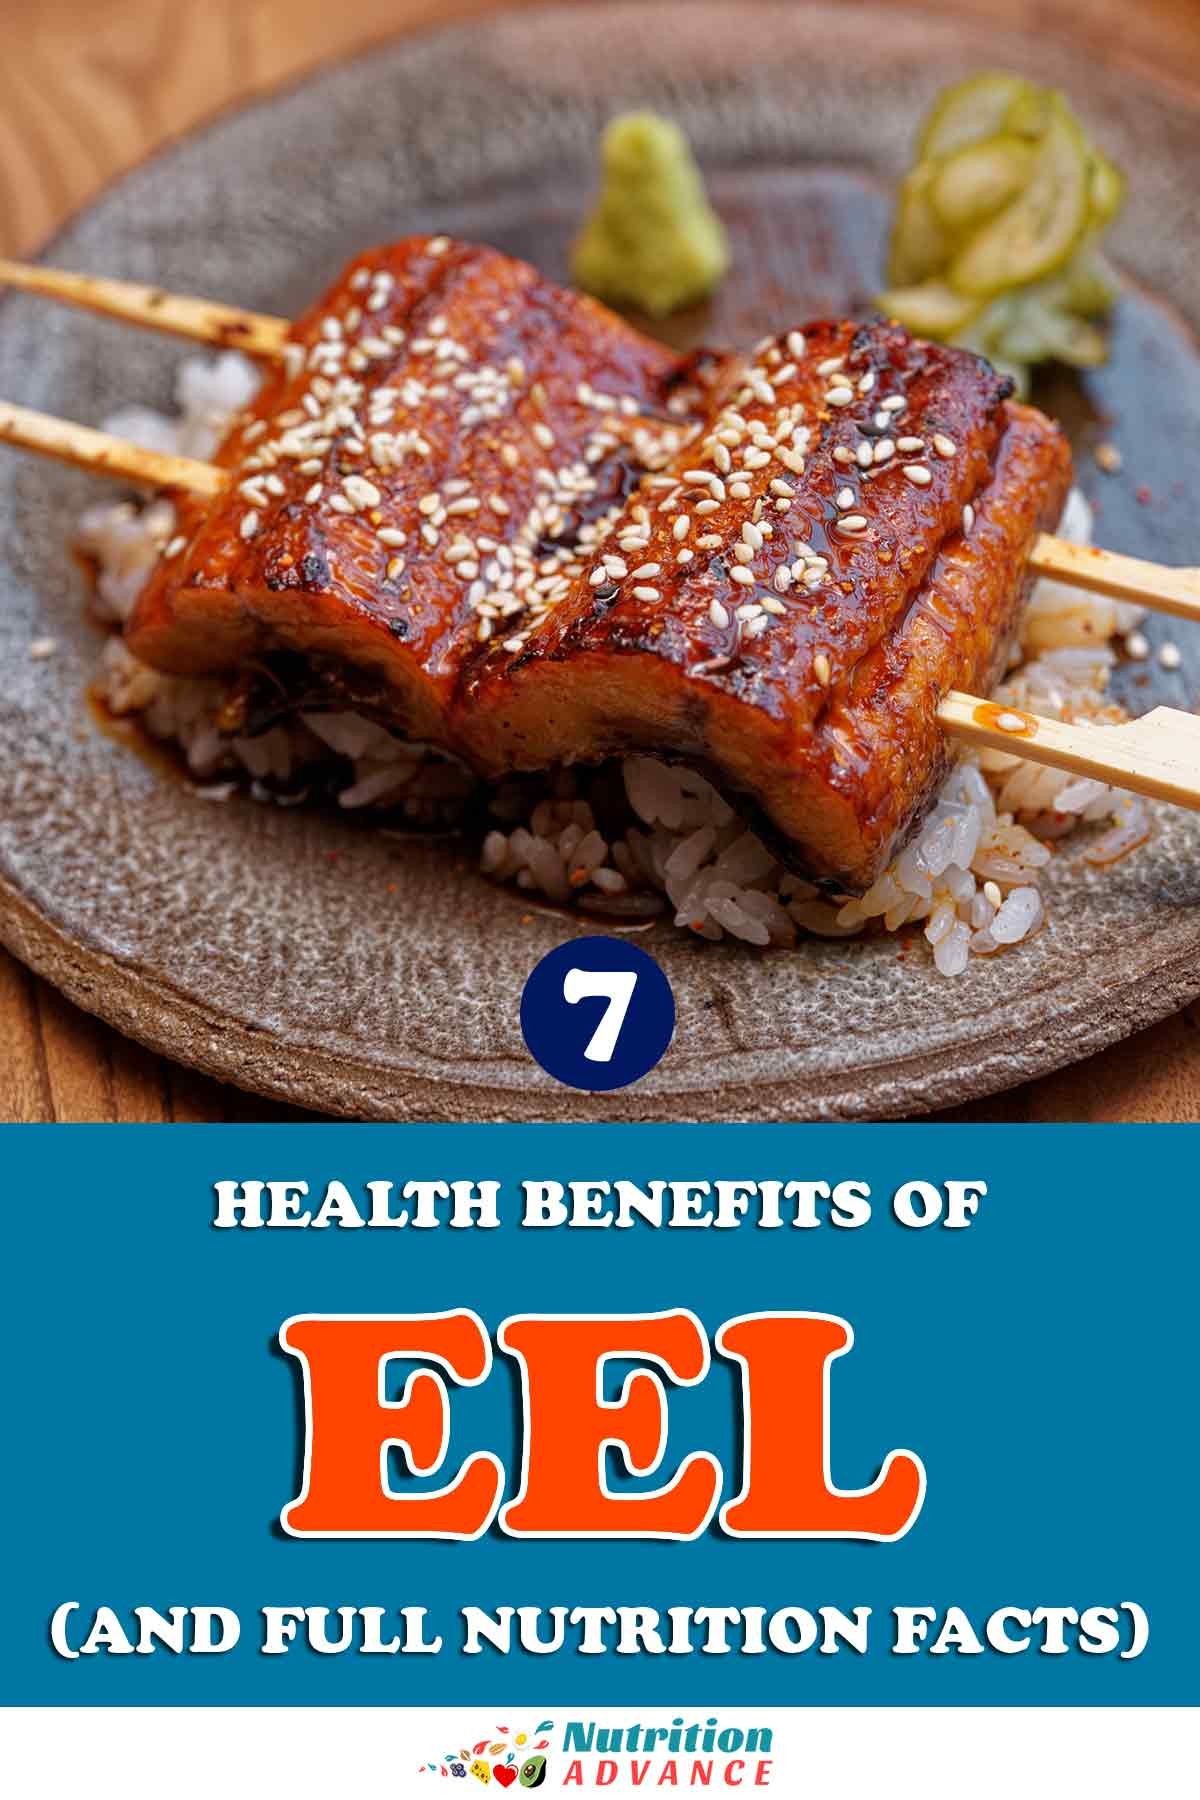 Is Eel Good for Health